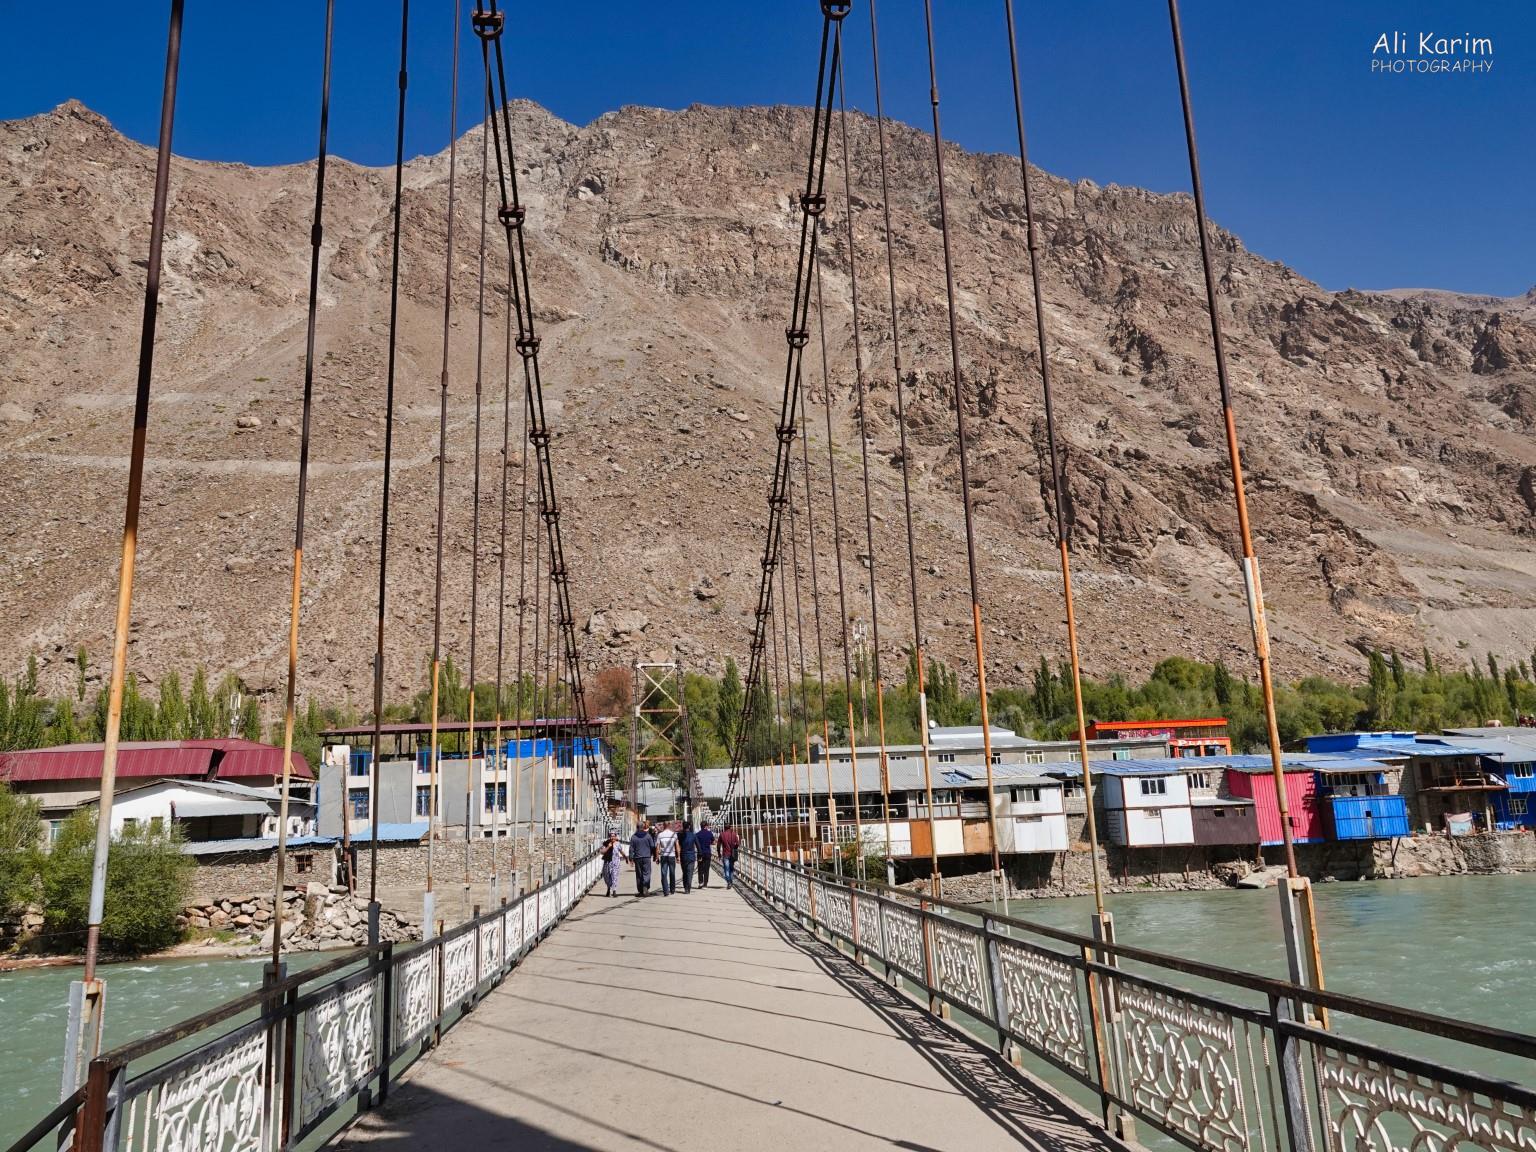 More Khorog, Tajikistan Bridge across the river Gunt in Khorog town